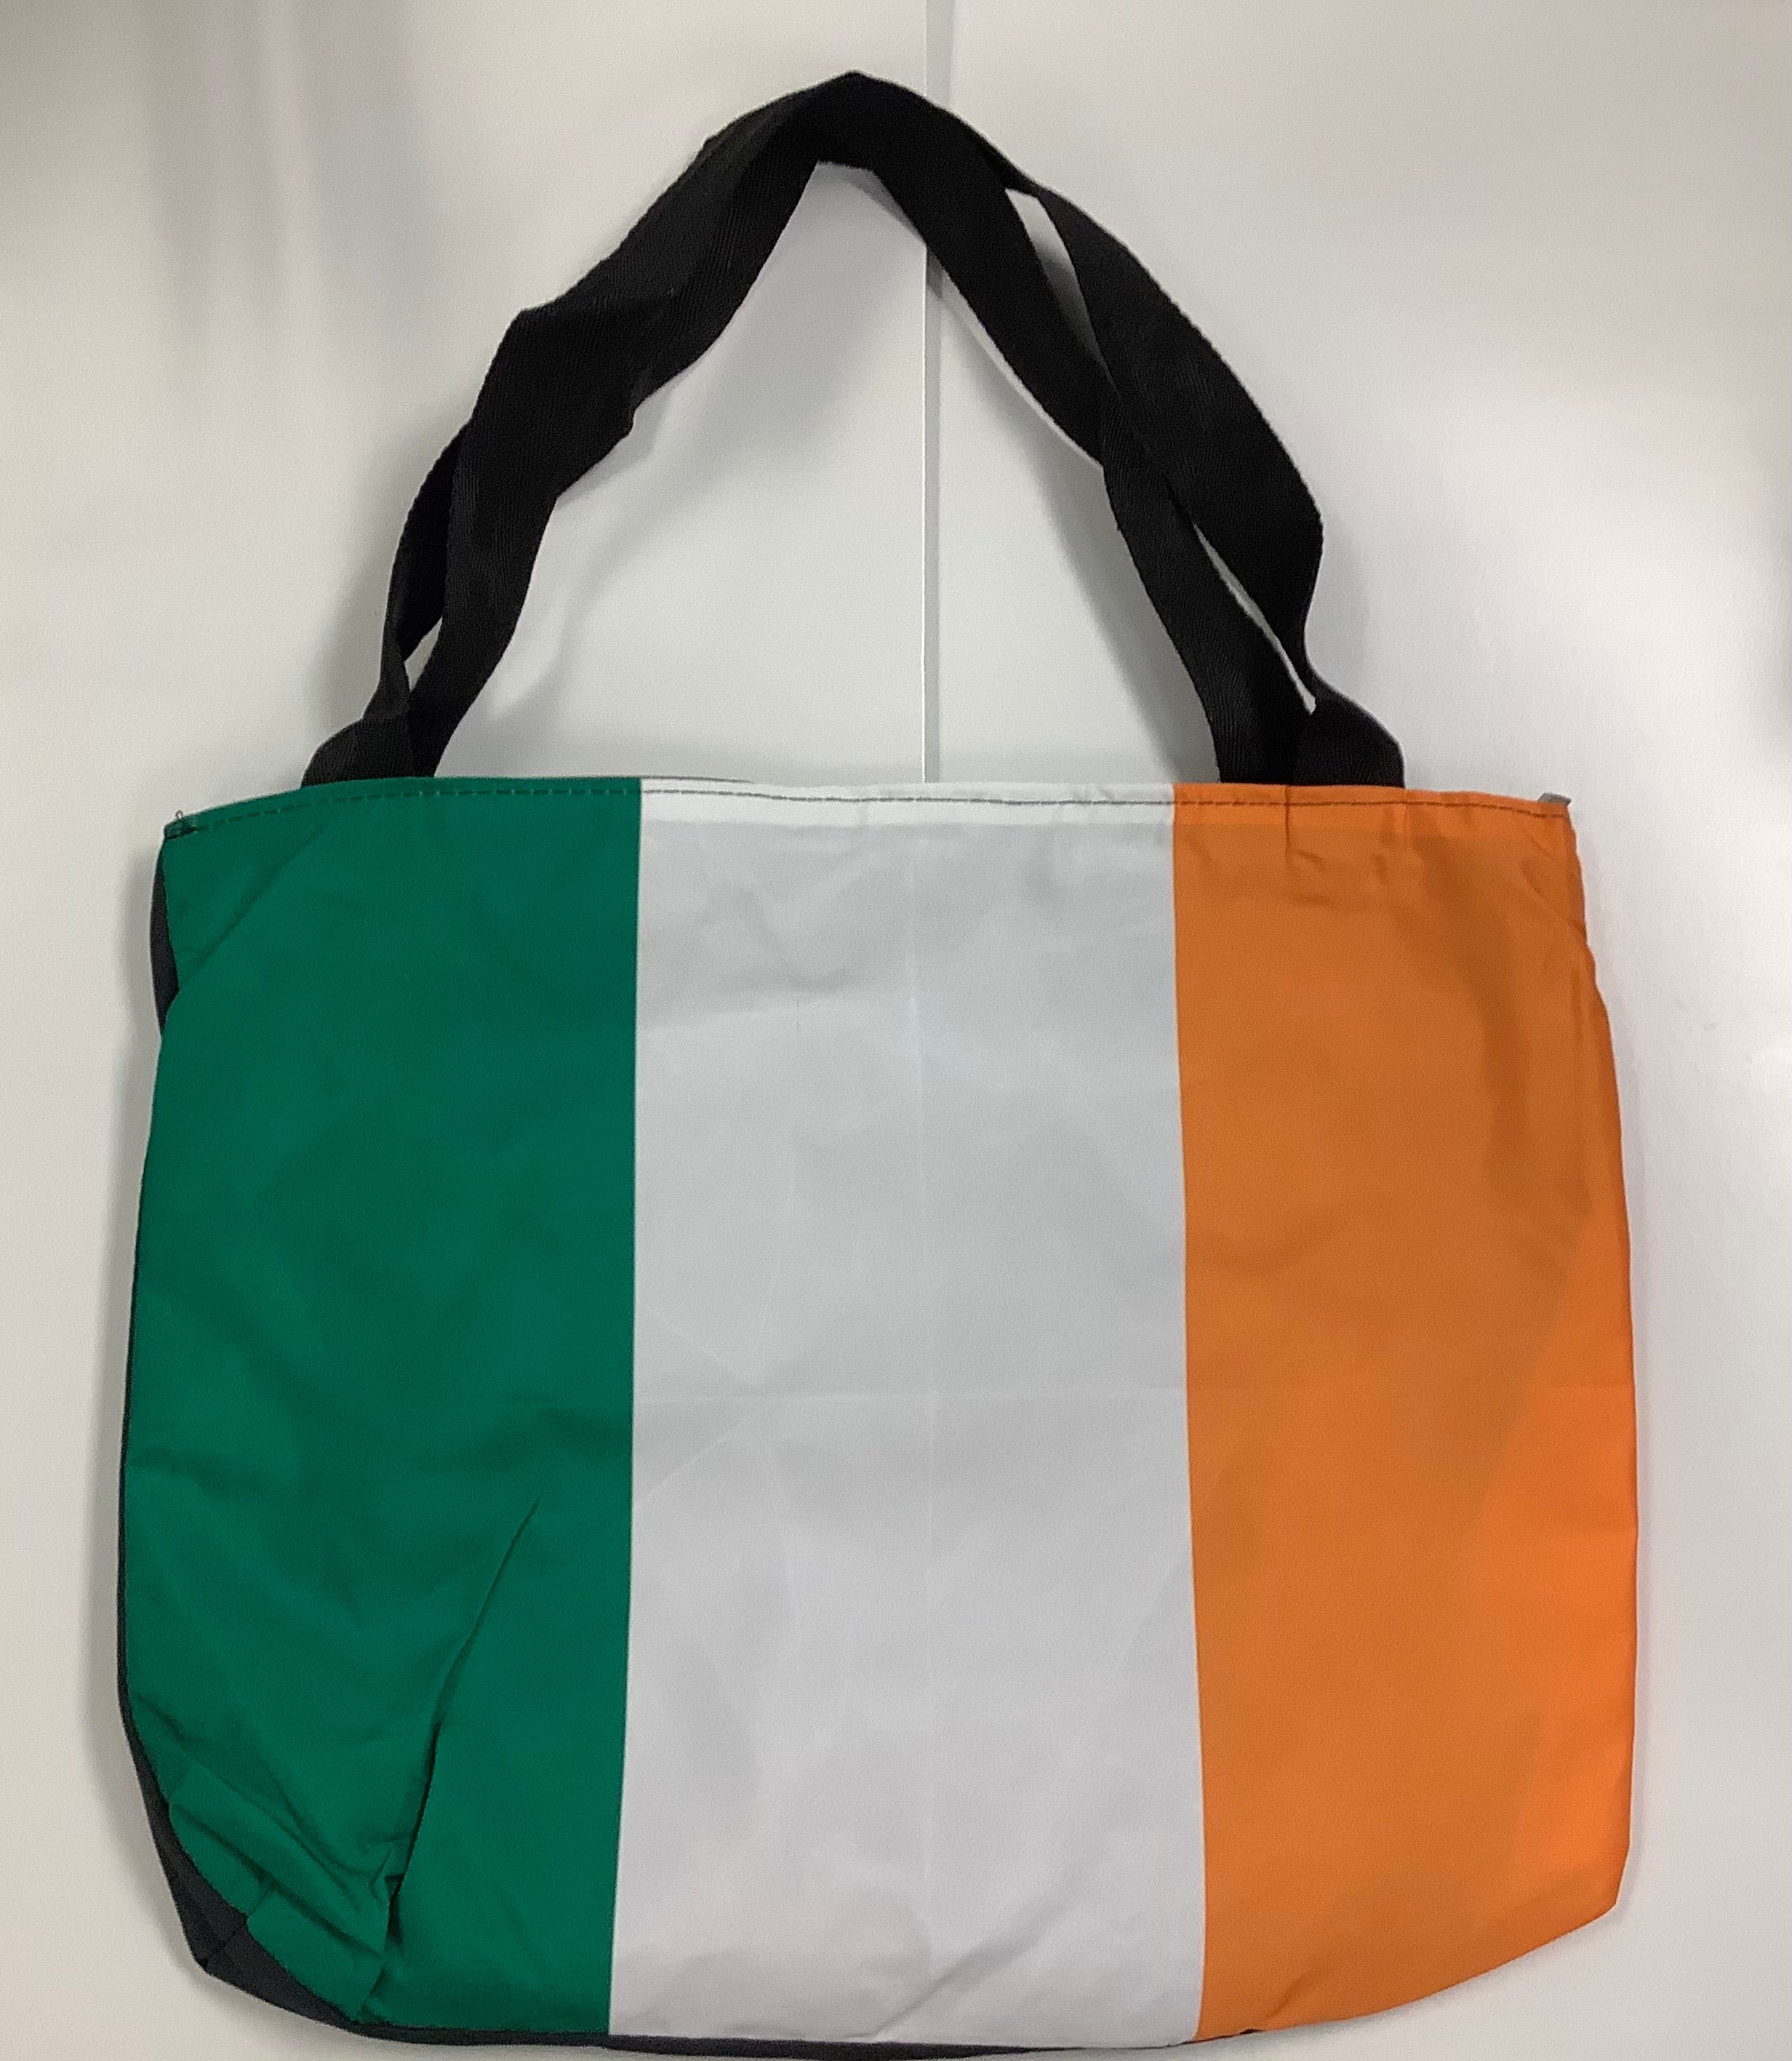 Irish flag tote